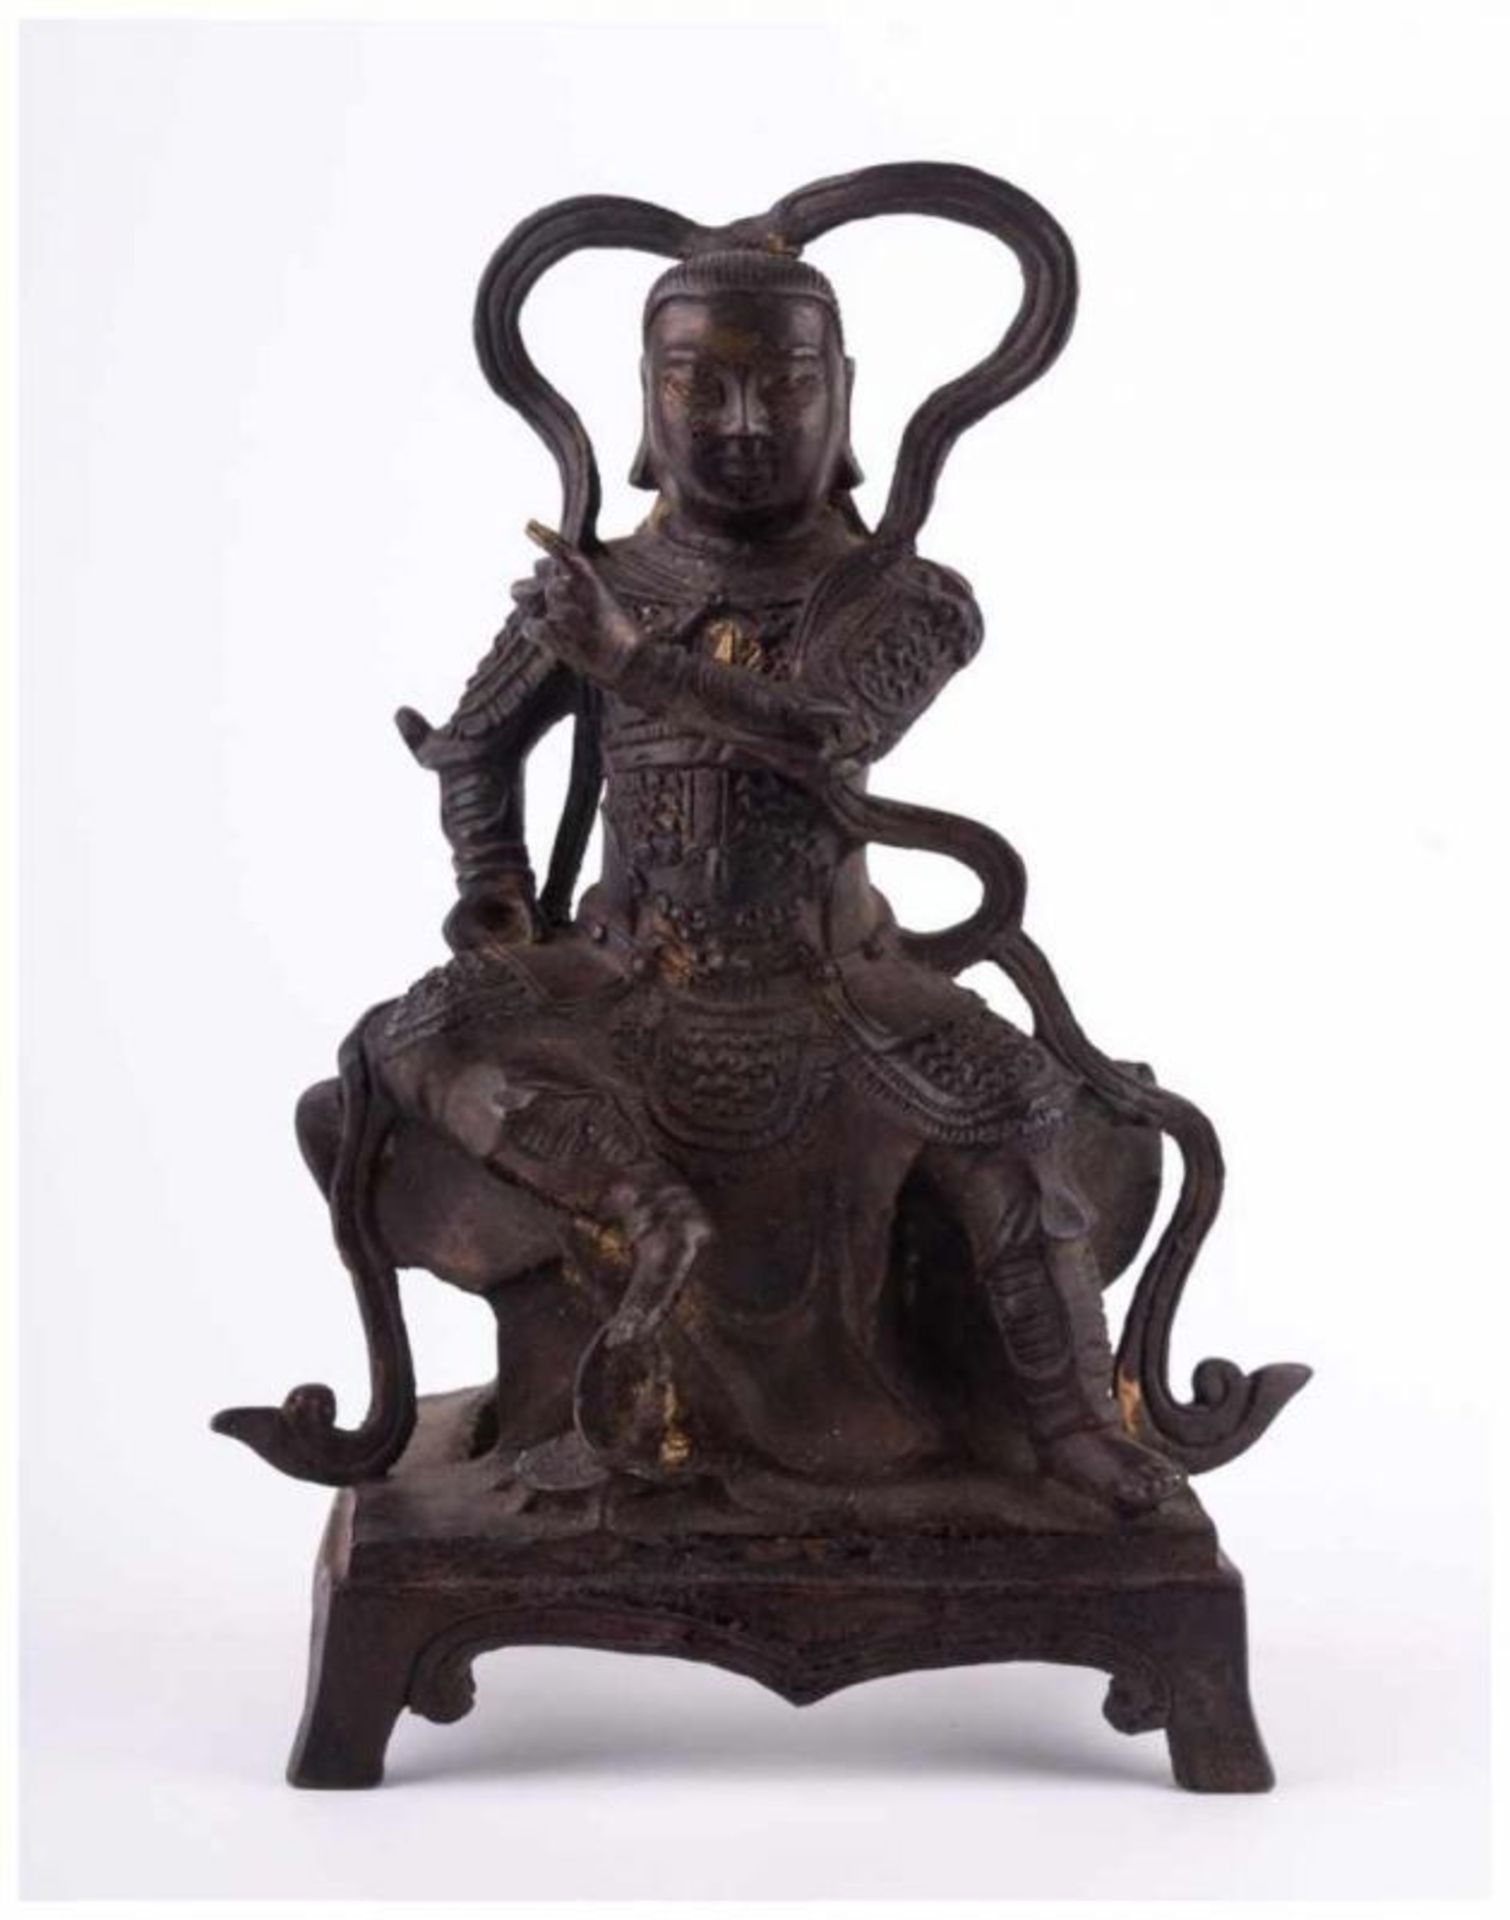 Alte Skulptur China / Old sculpture, China - Bronze, braun Patina mit Resten alter [...] - Image 2 of 14